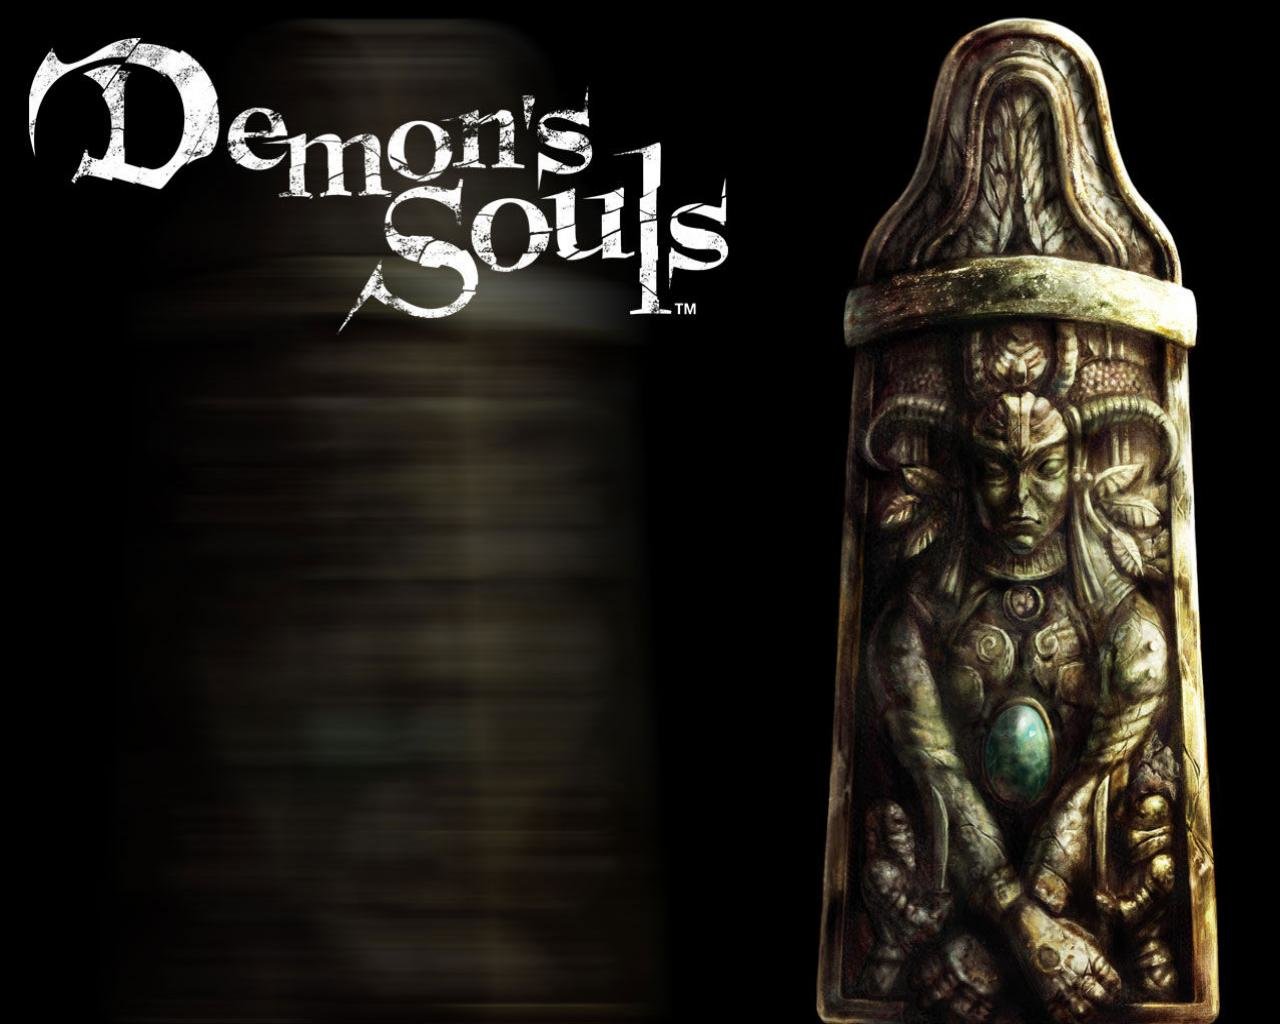 Best Demon's Souls wallpaper ID:150688 for High Resolution hd 1280x1024 computer